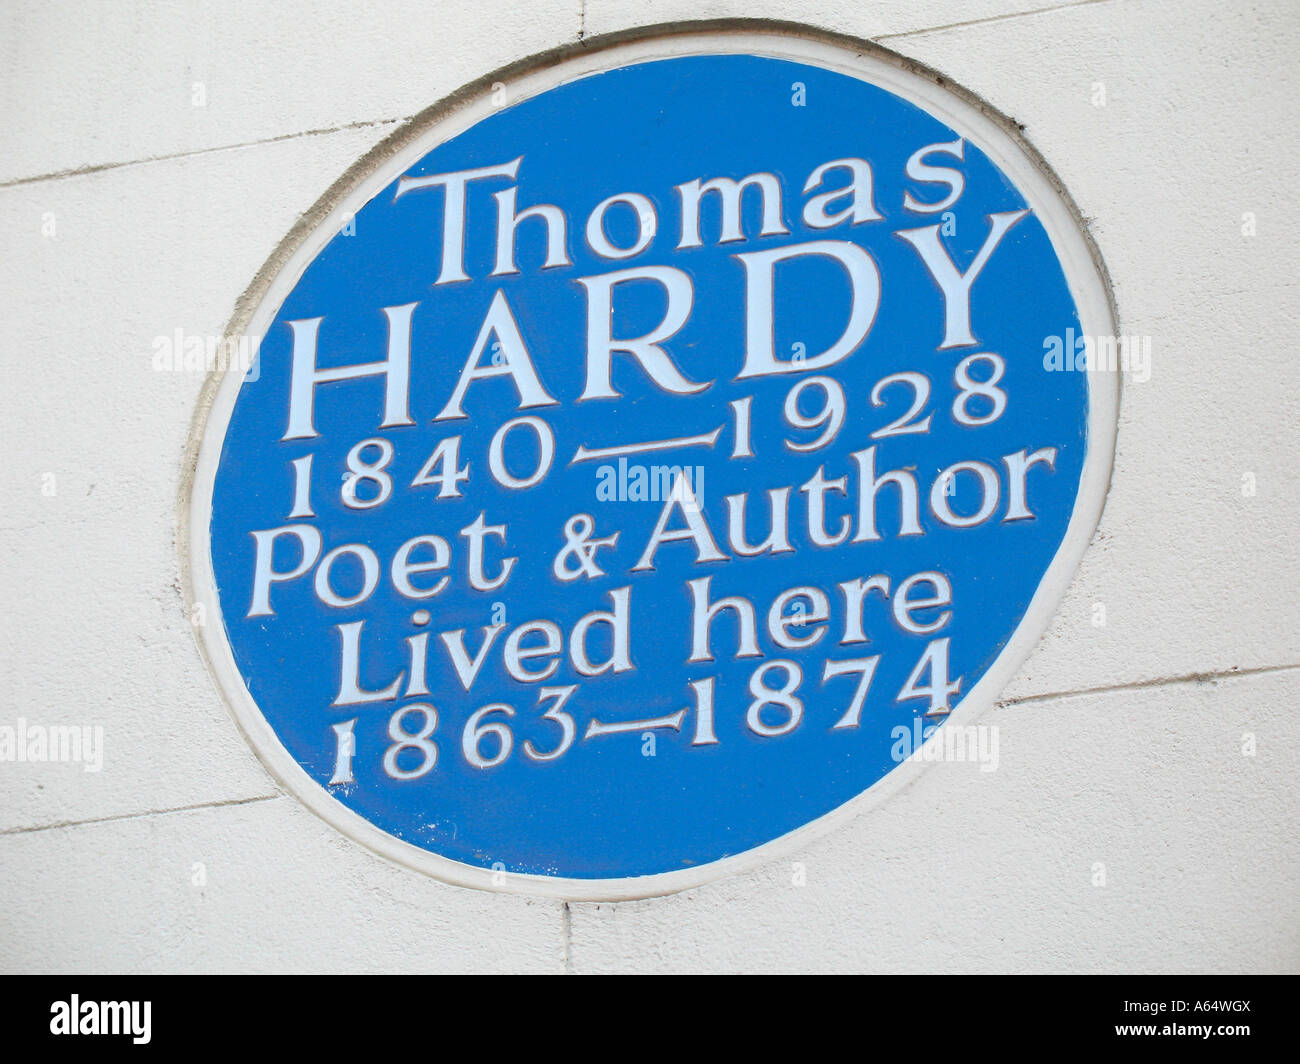 Thomas Hardy lived here London England Stock Photo